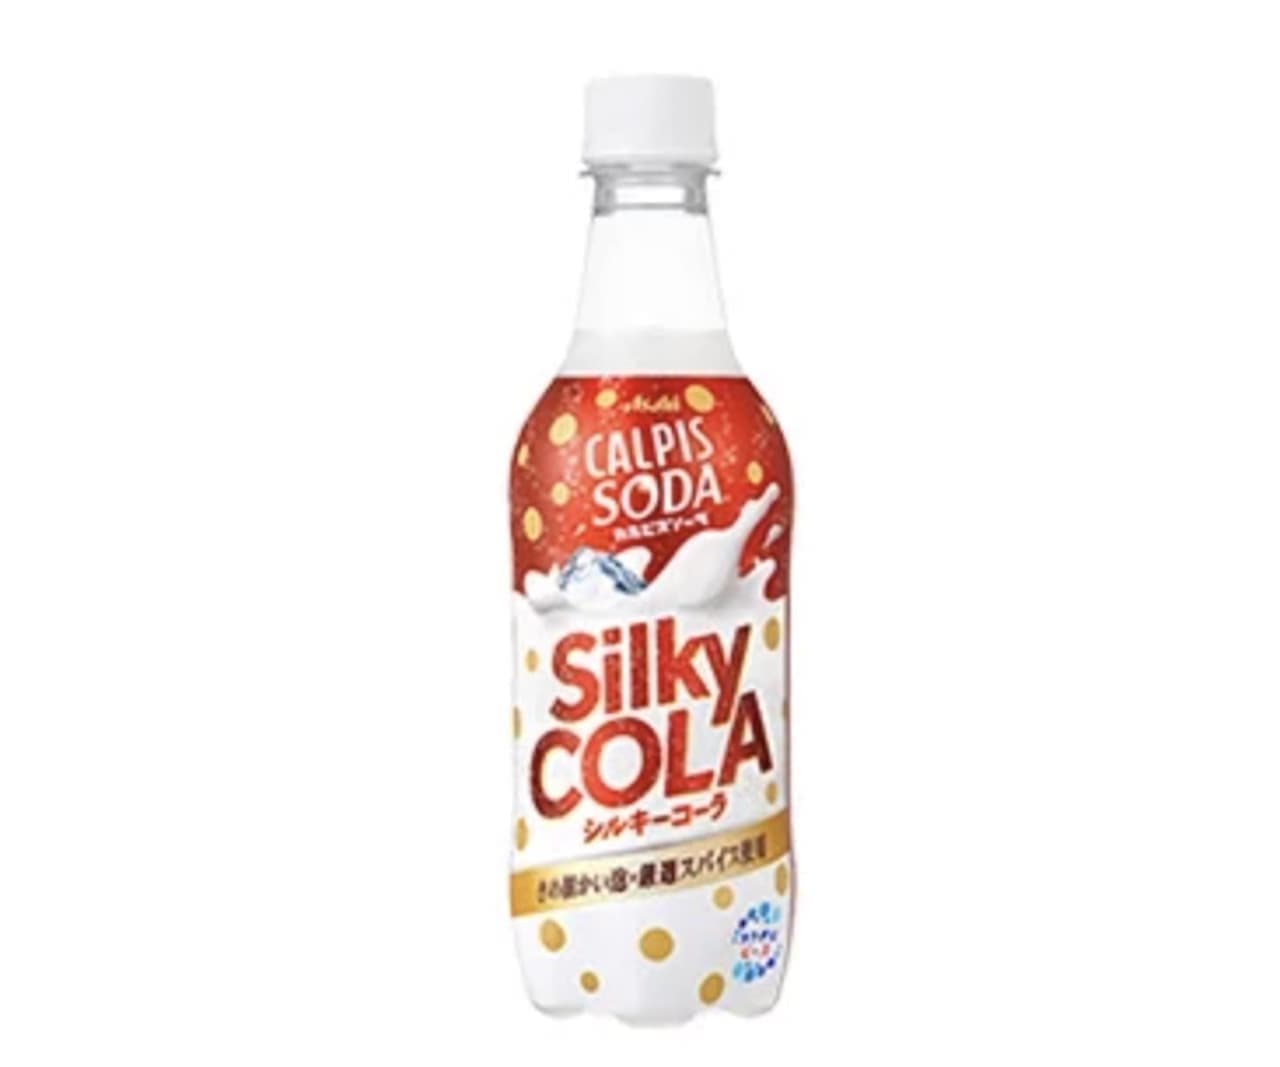 Asahi Soft Drinks "Calpis Soda Silky Cola